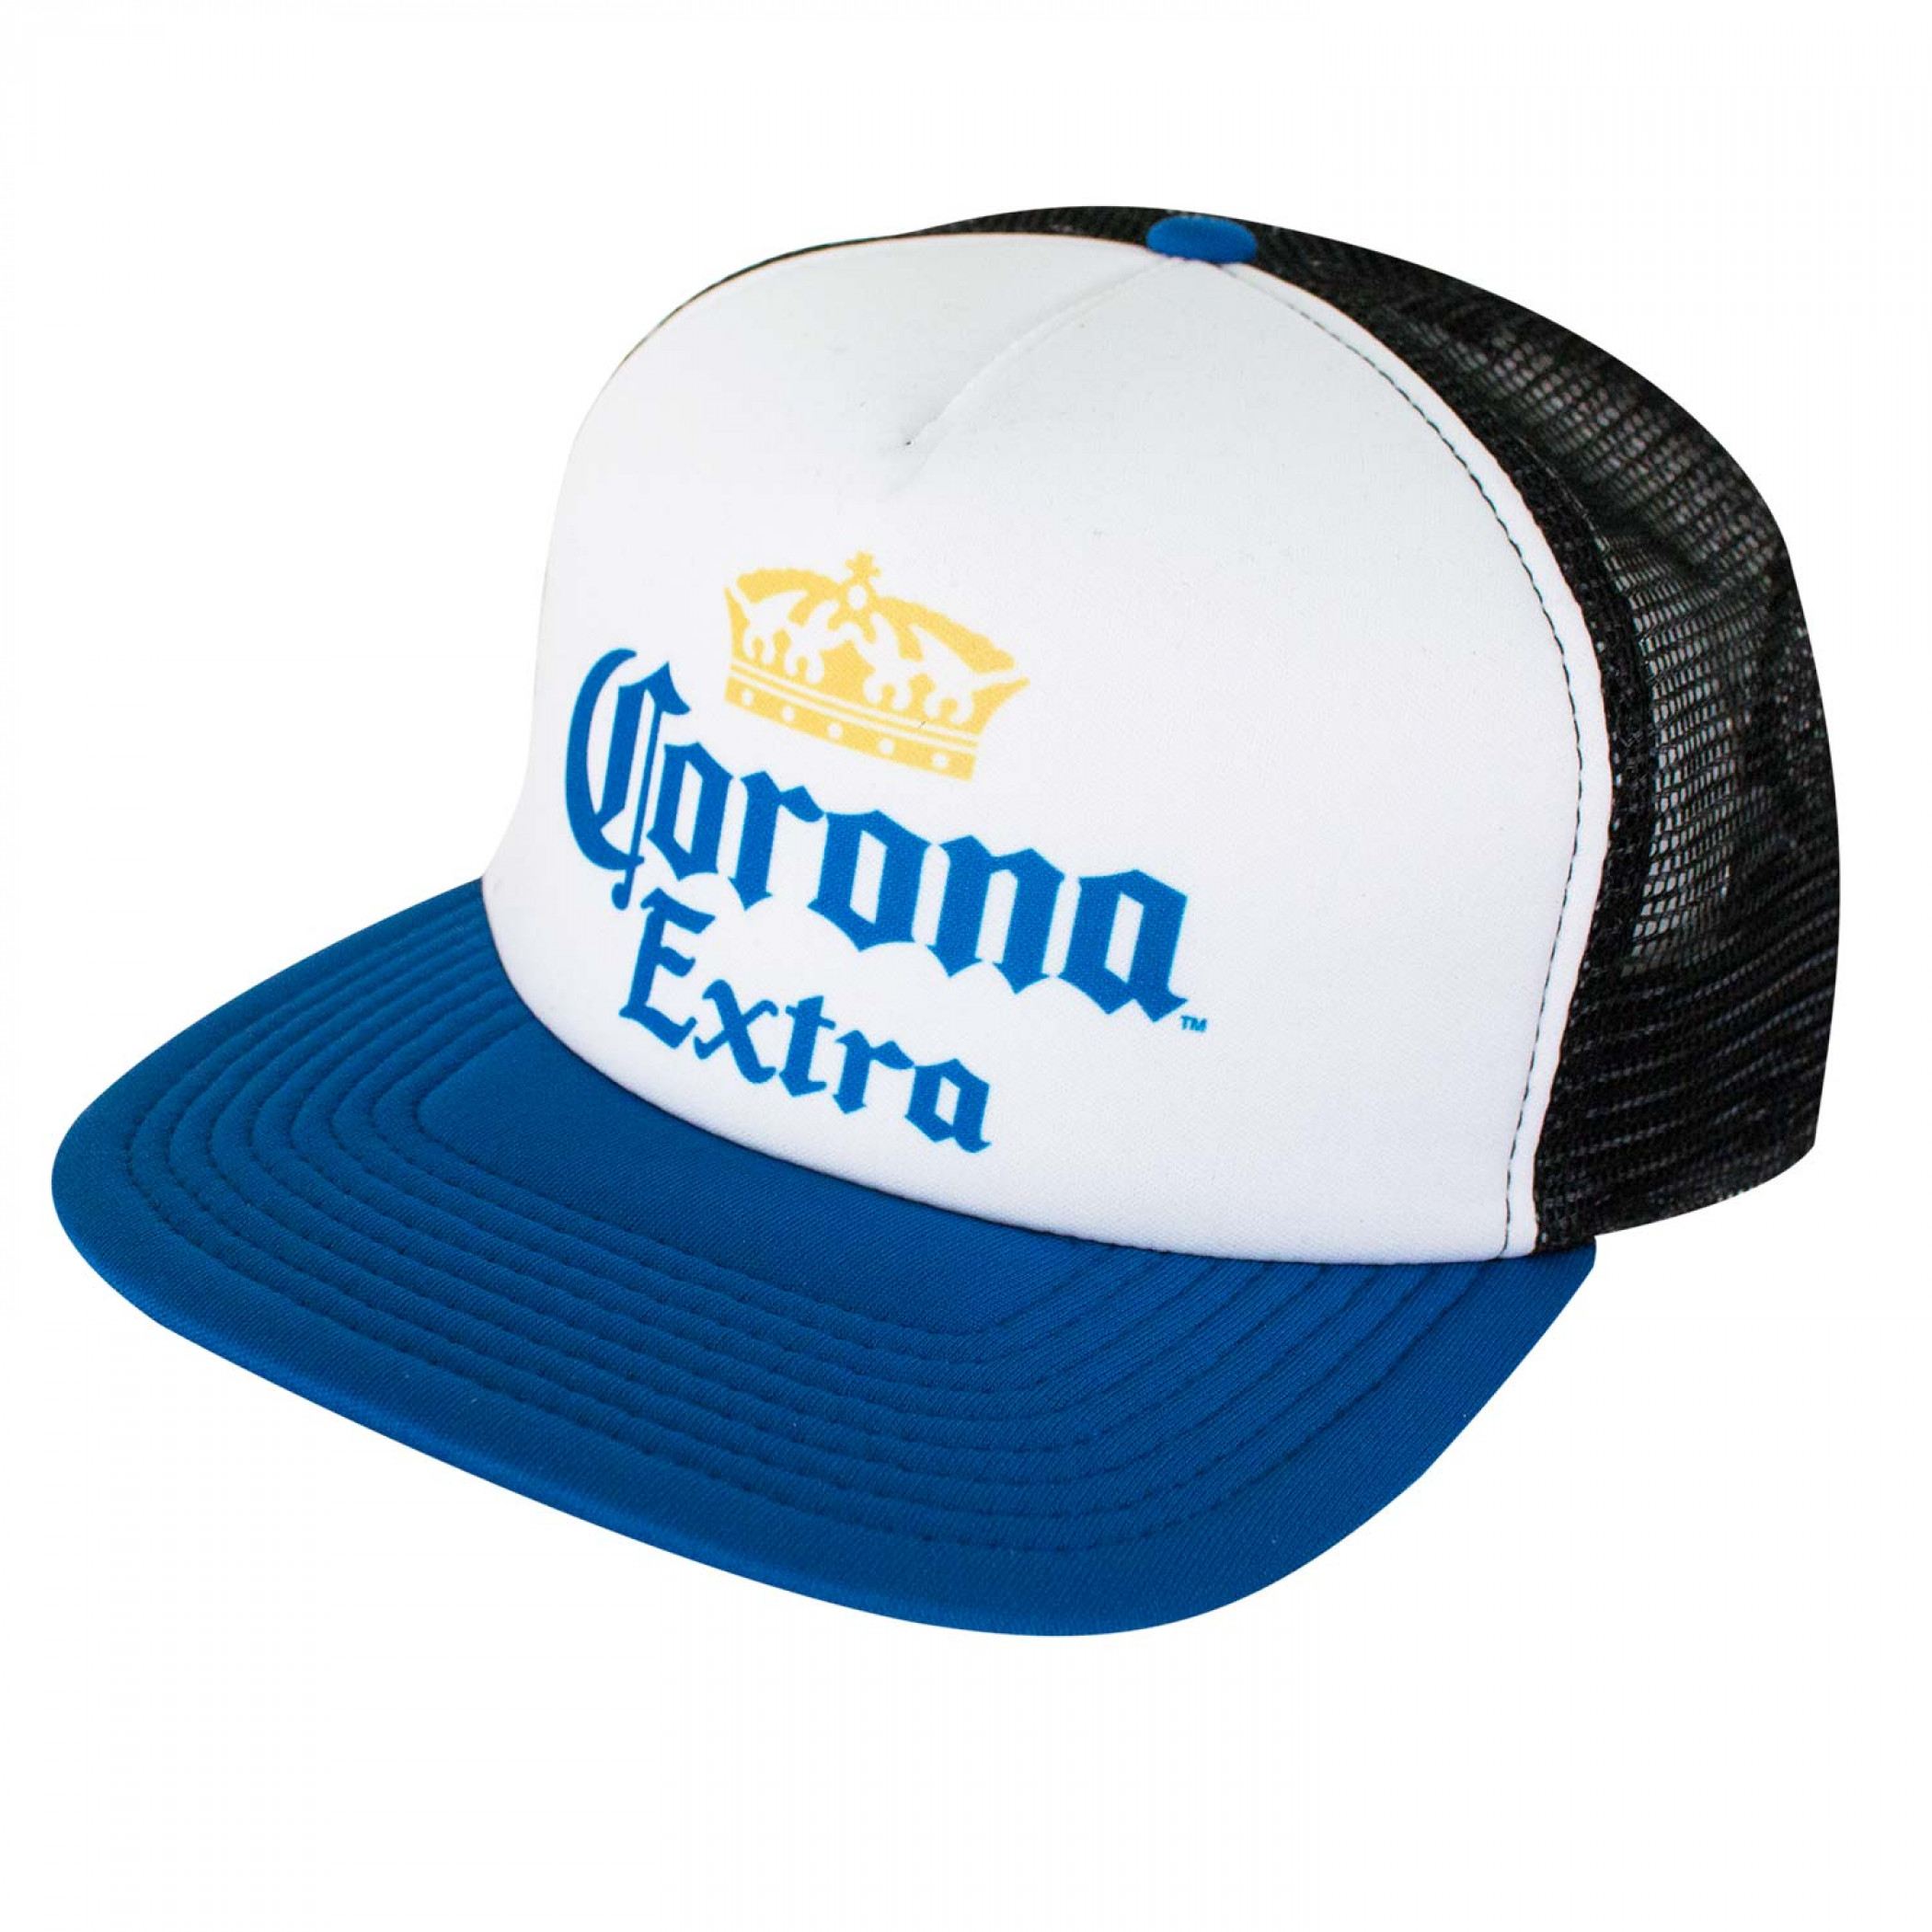 Corona Mesh Back Trucker Hat